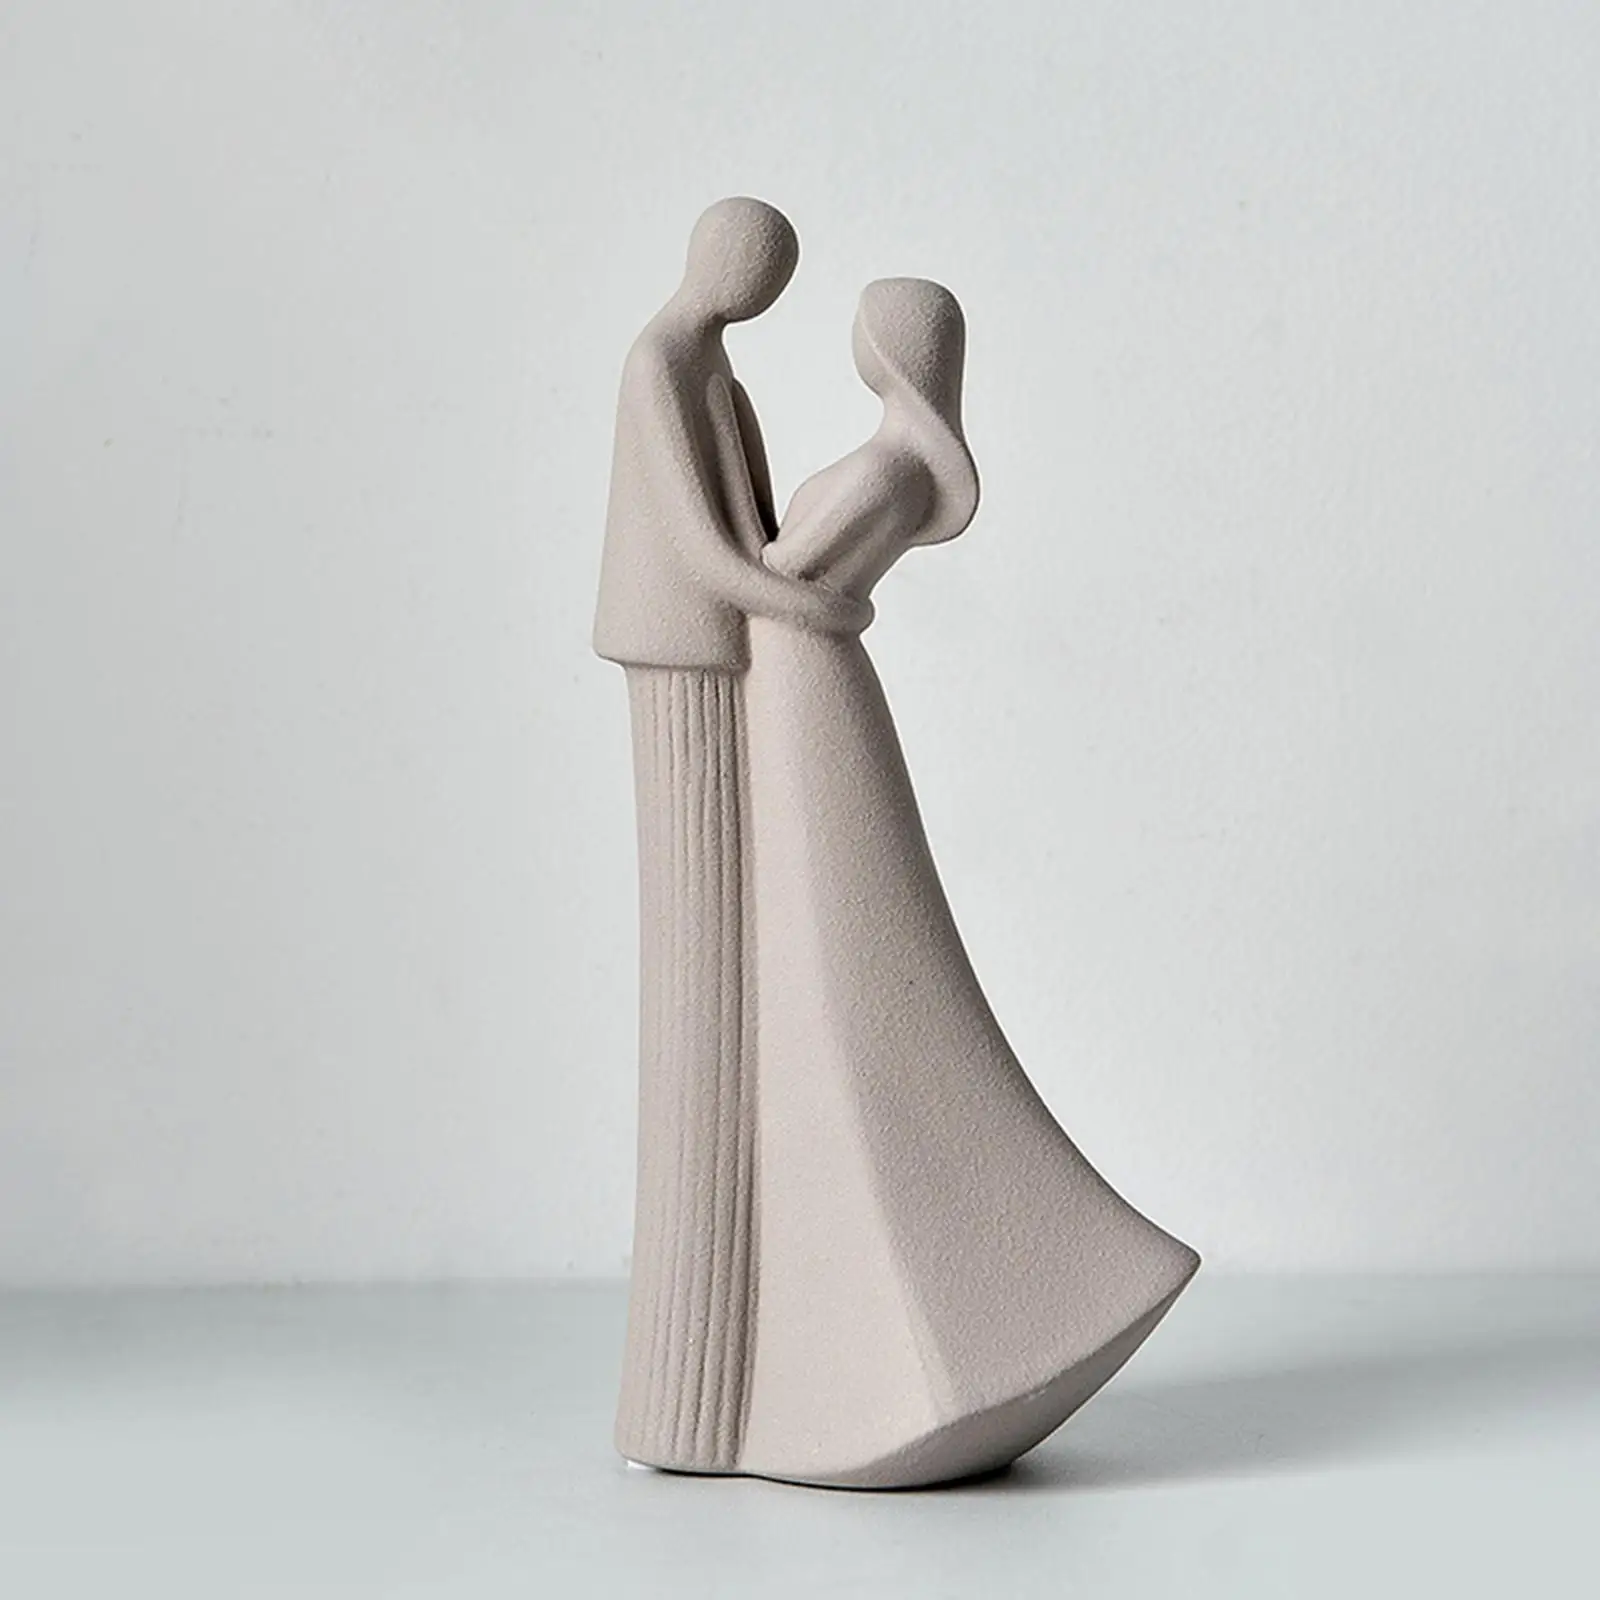 Creative Couple Statue Ornament Craft Romantic Love Figurine for Restaurant Table Centerpiece Anniversary Bookshelf Bedroom